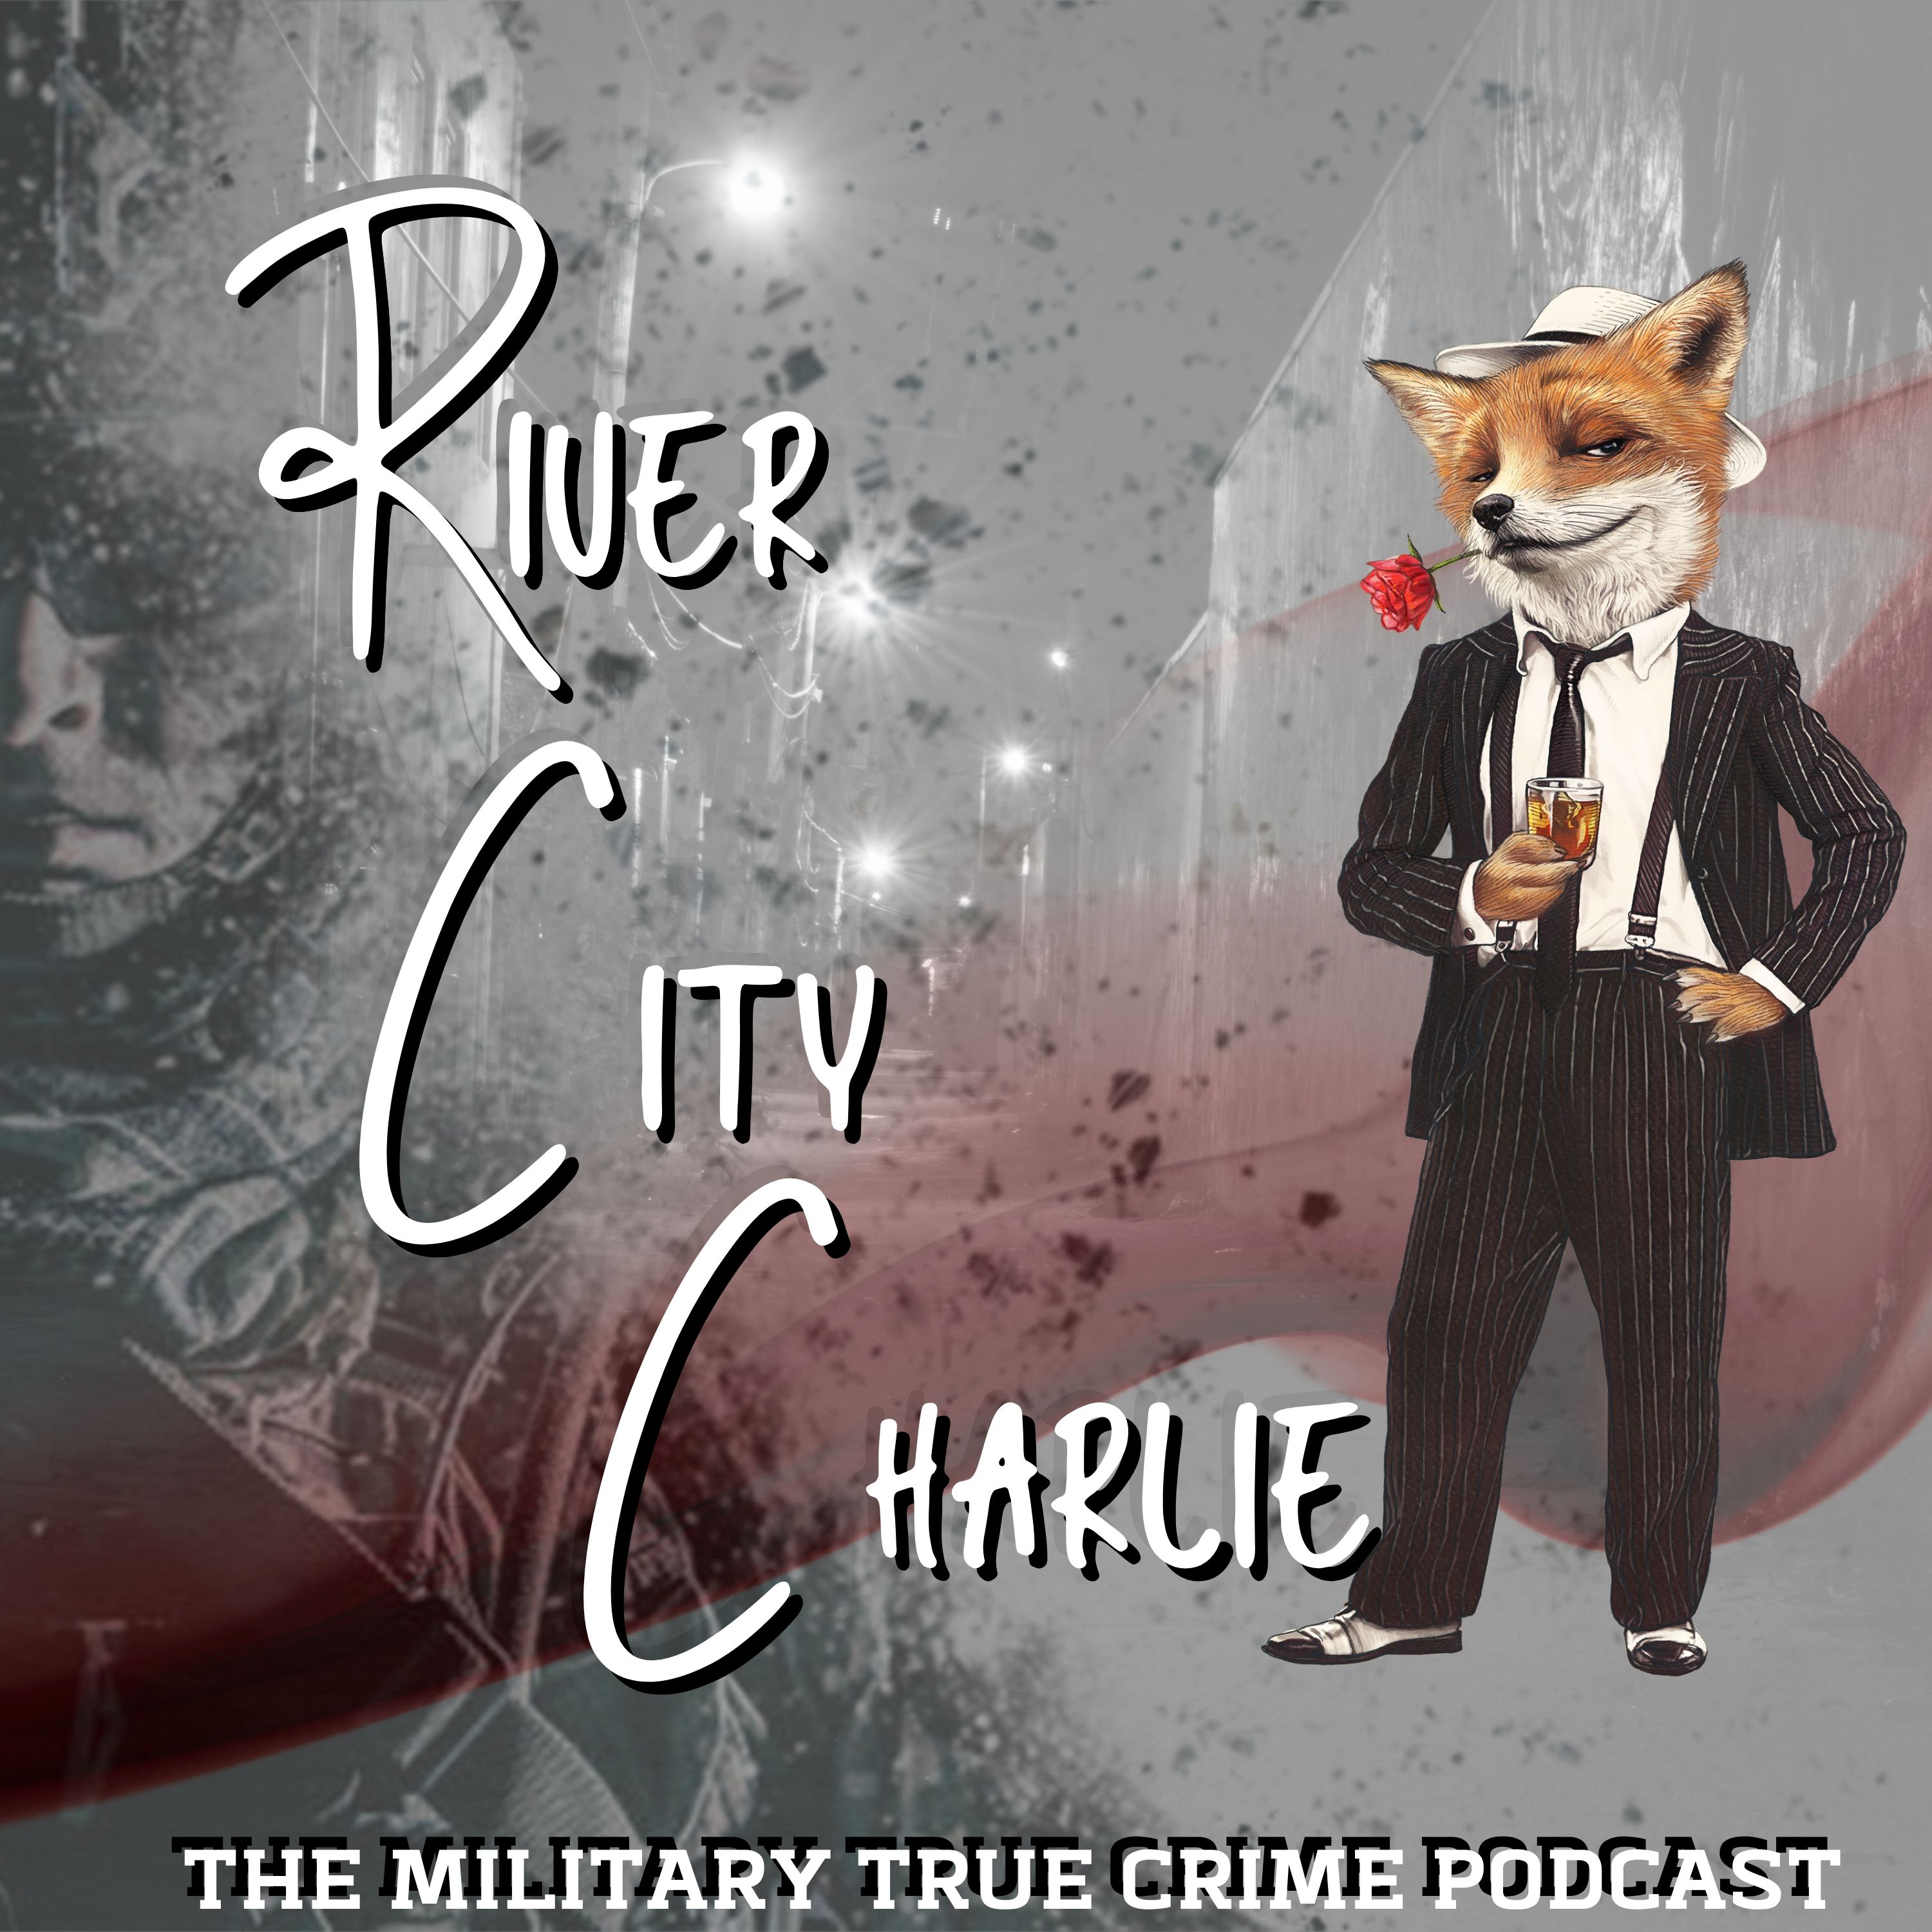 River City Charlie - The Military True Crime Podcast